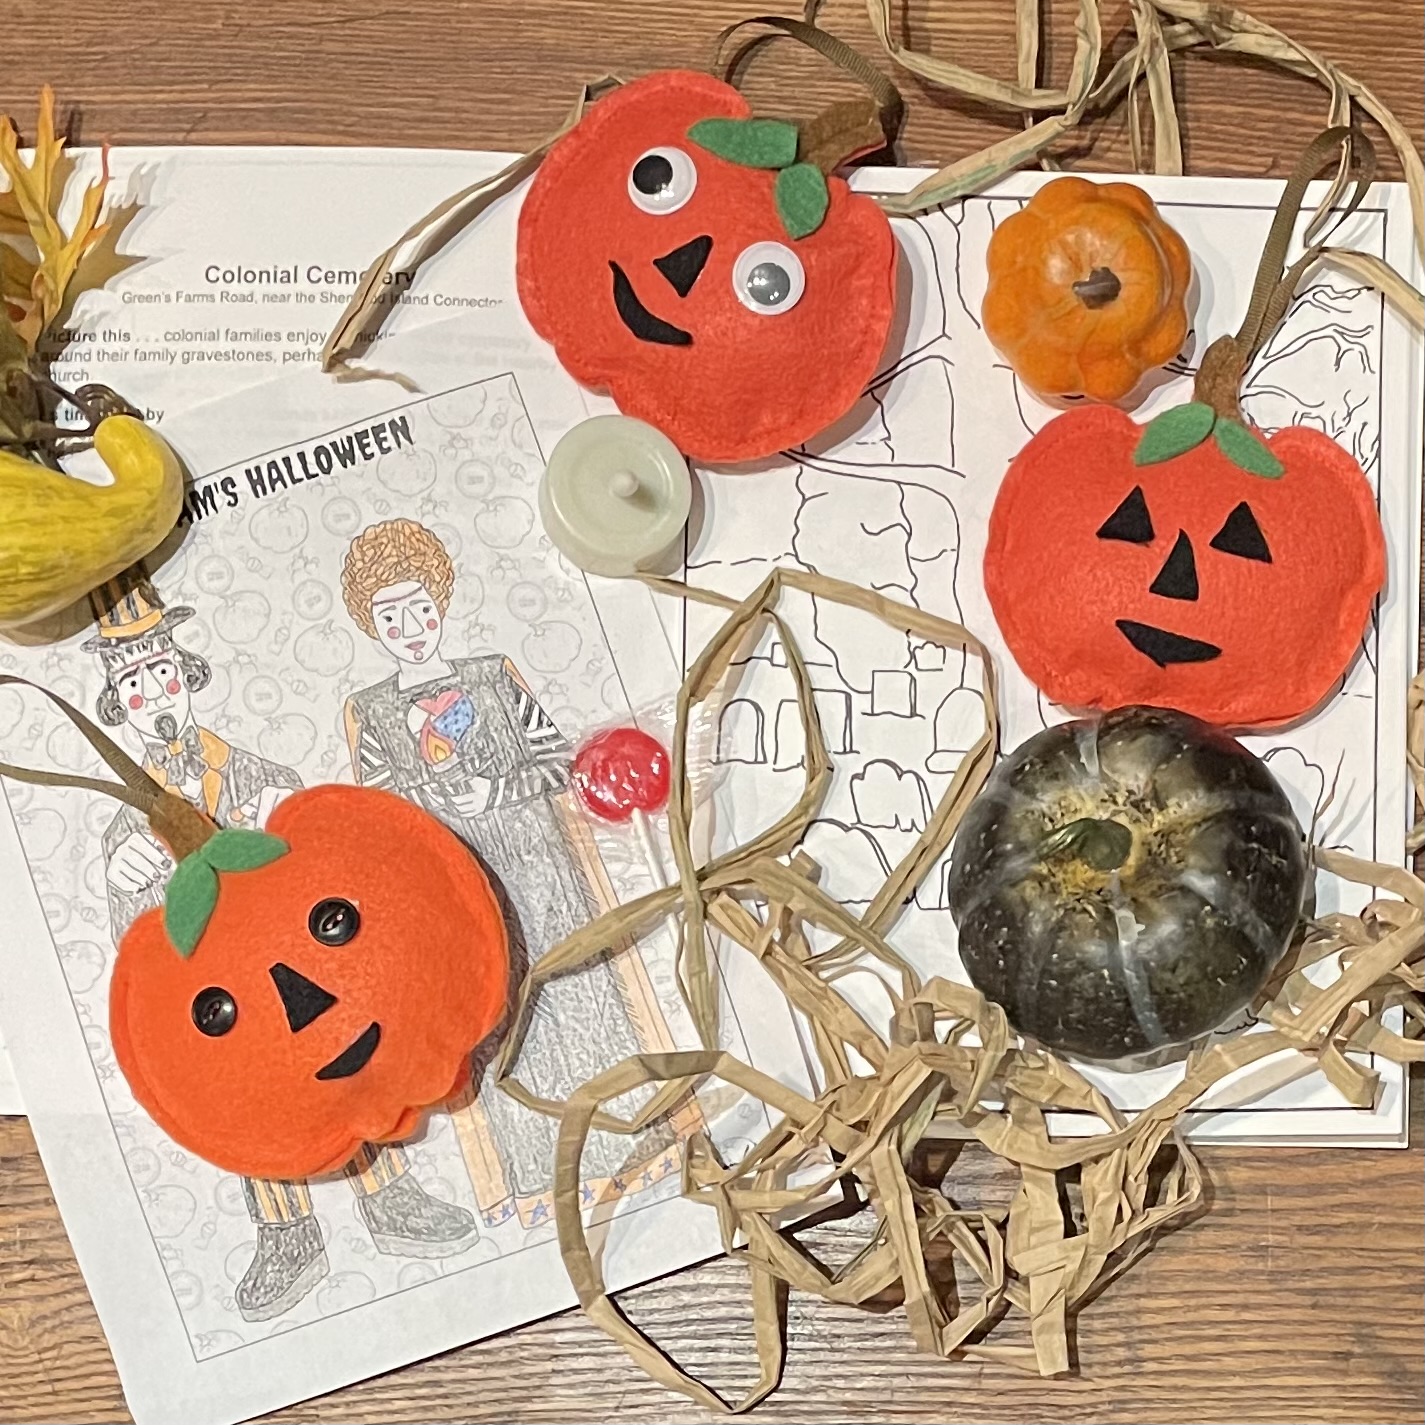 Felt pumpkin crafting kits